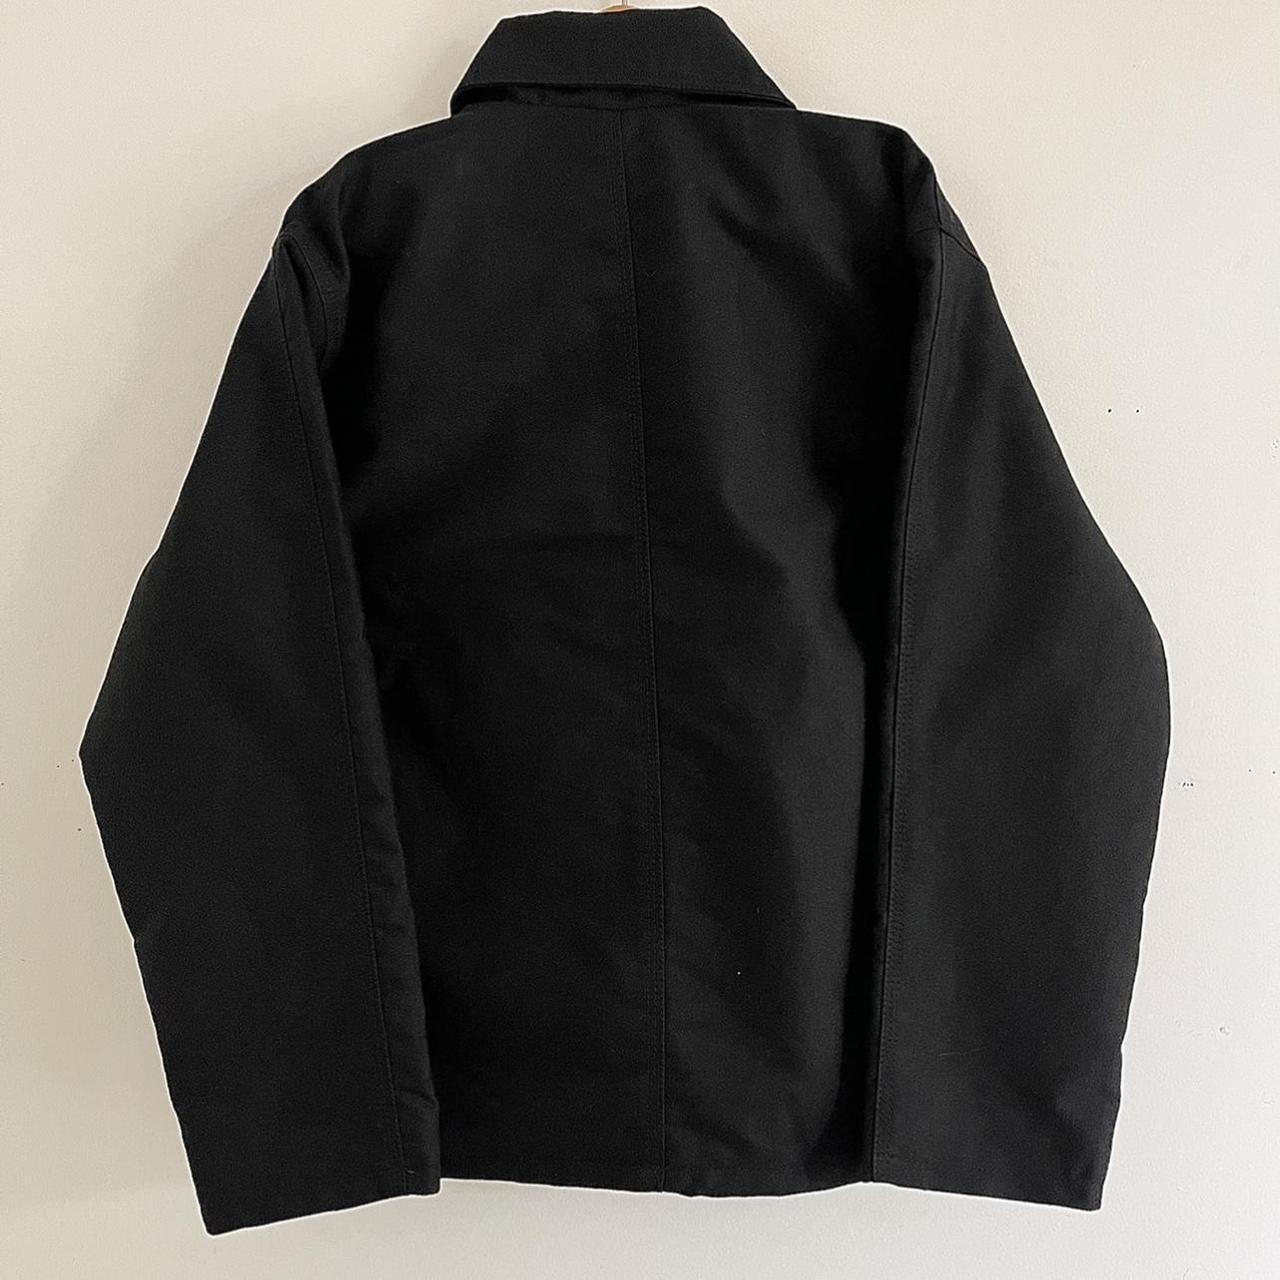 Model: Carhartt Detroit Black Rework jacket with... - Depop